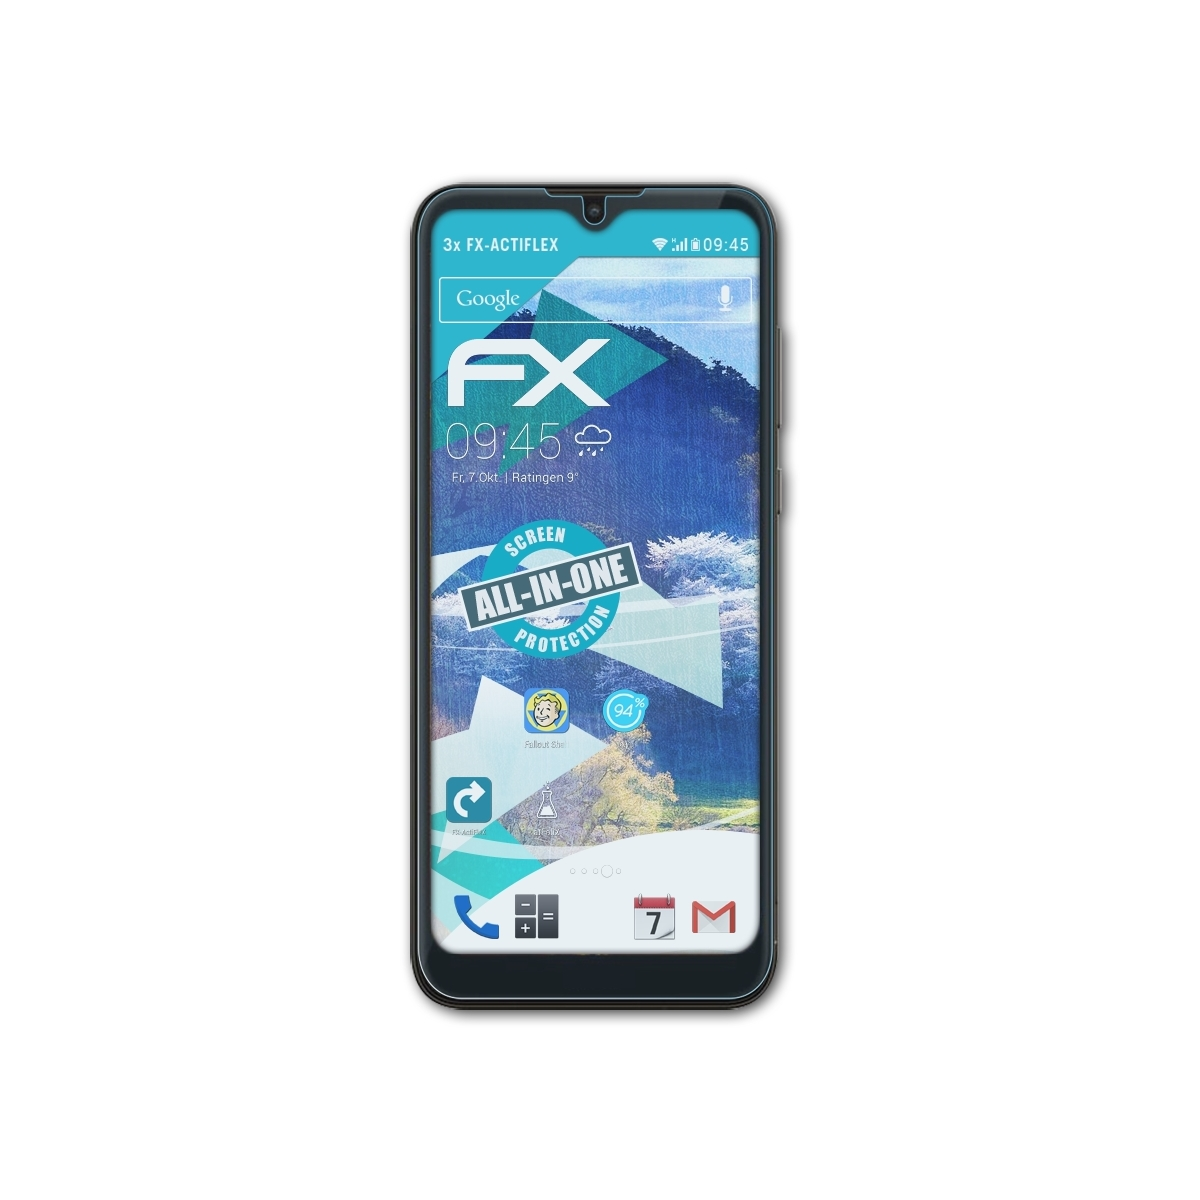 Displayschutz(für 3x ATFOLIX Nokia C30) FX-ActiFleX